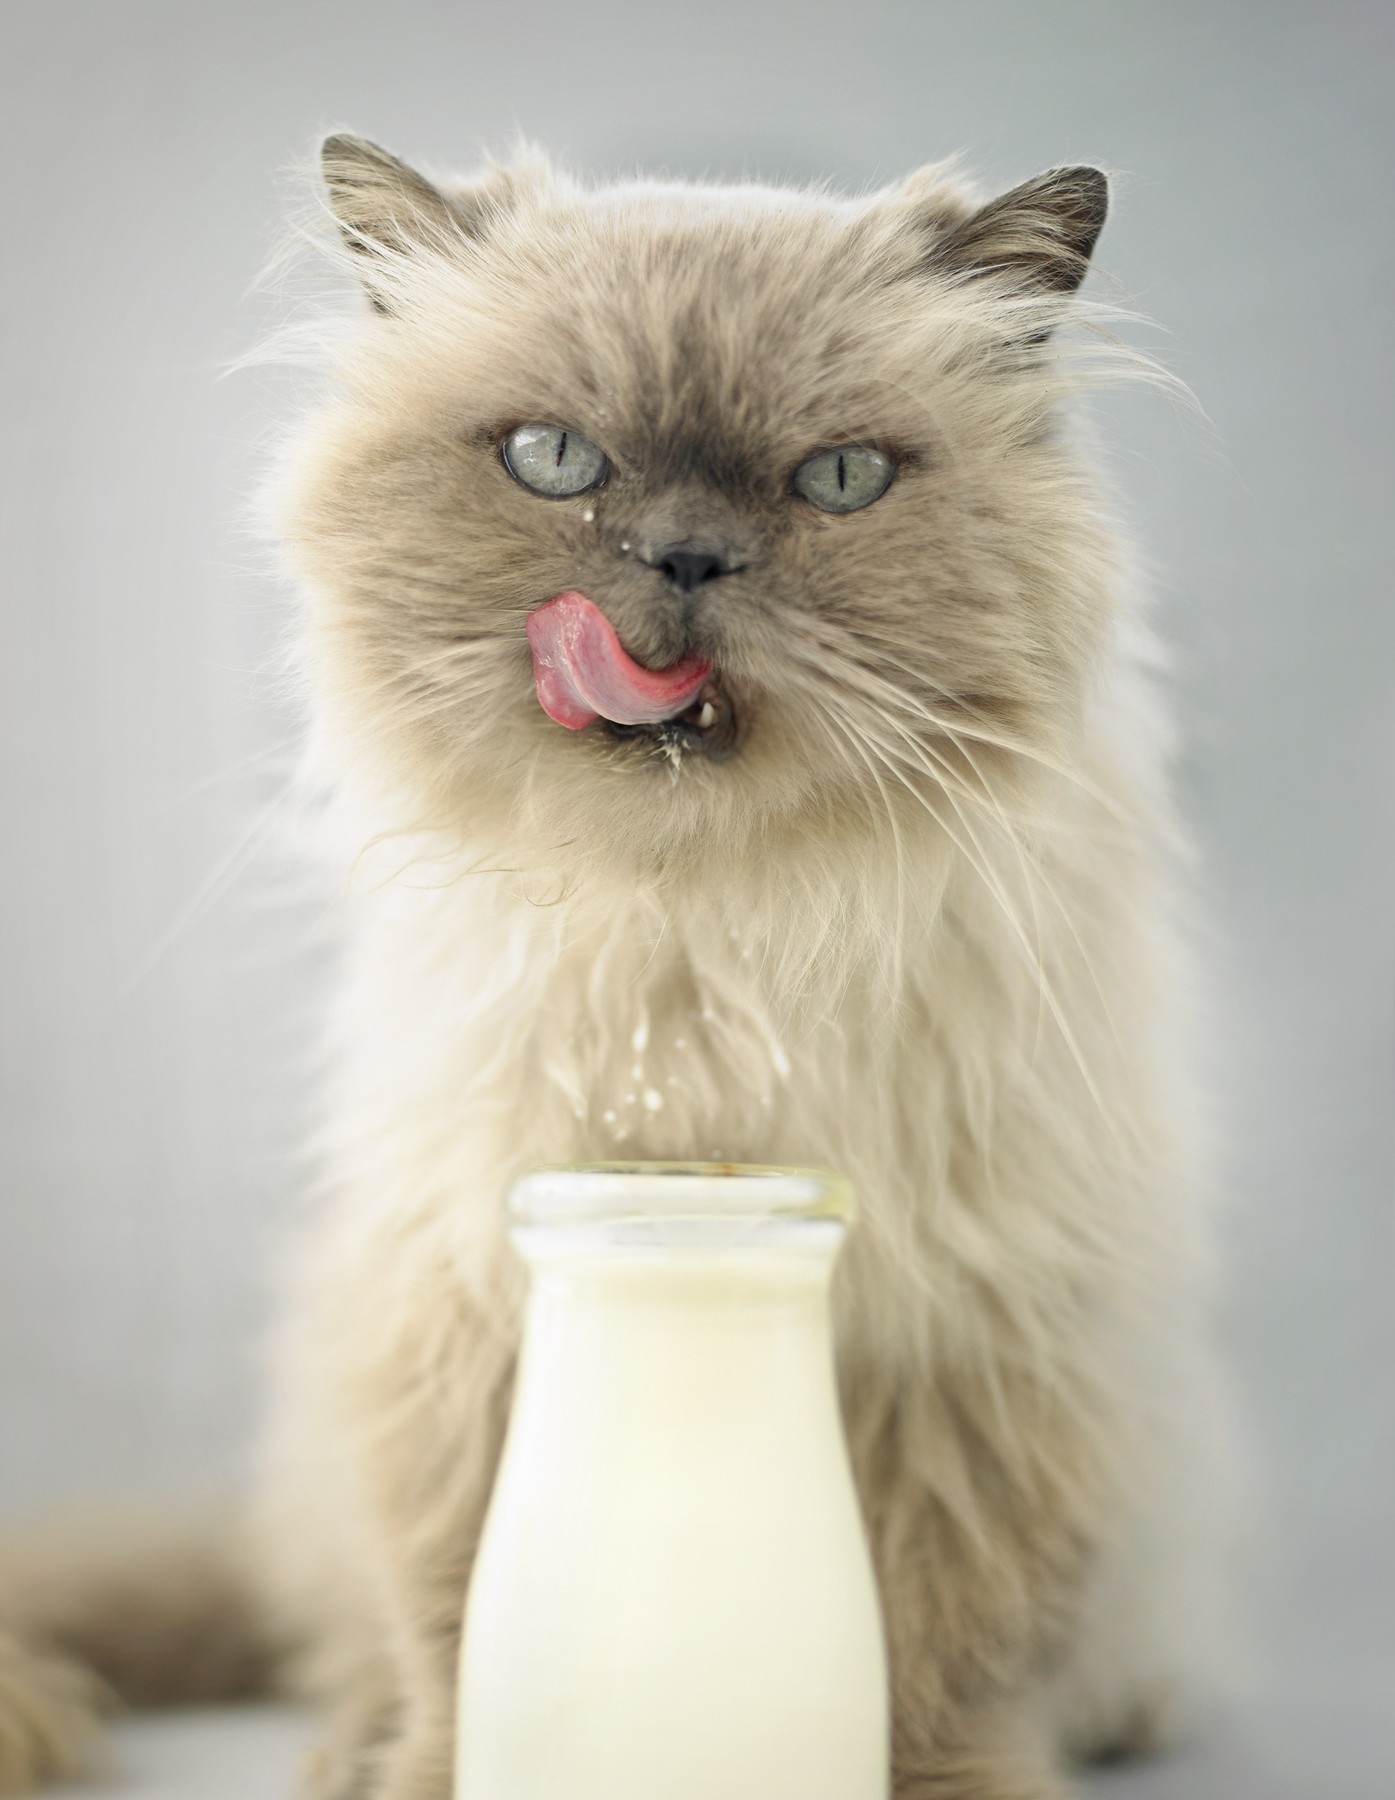 Mačka pije mleko iz boce